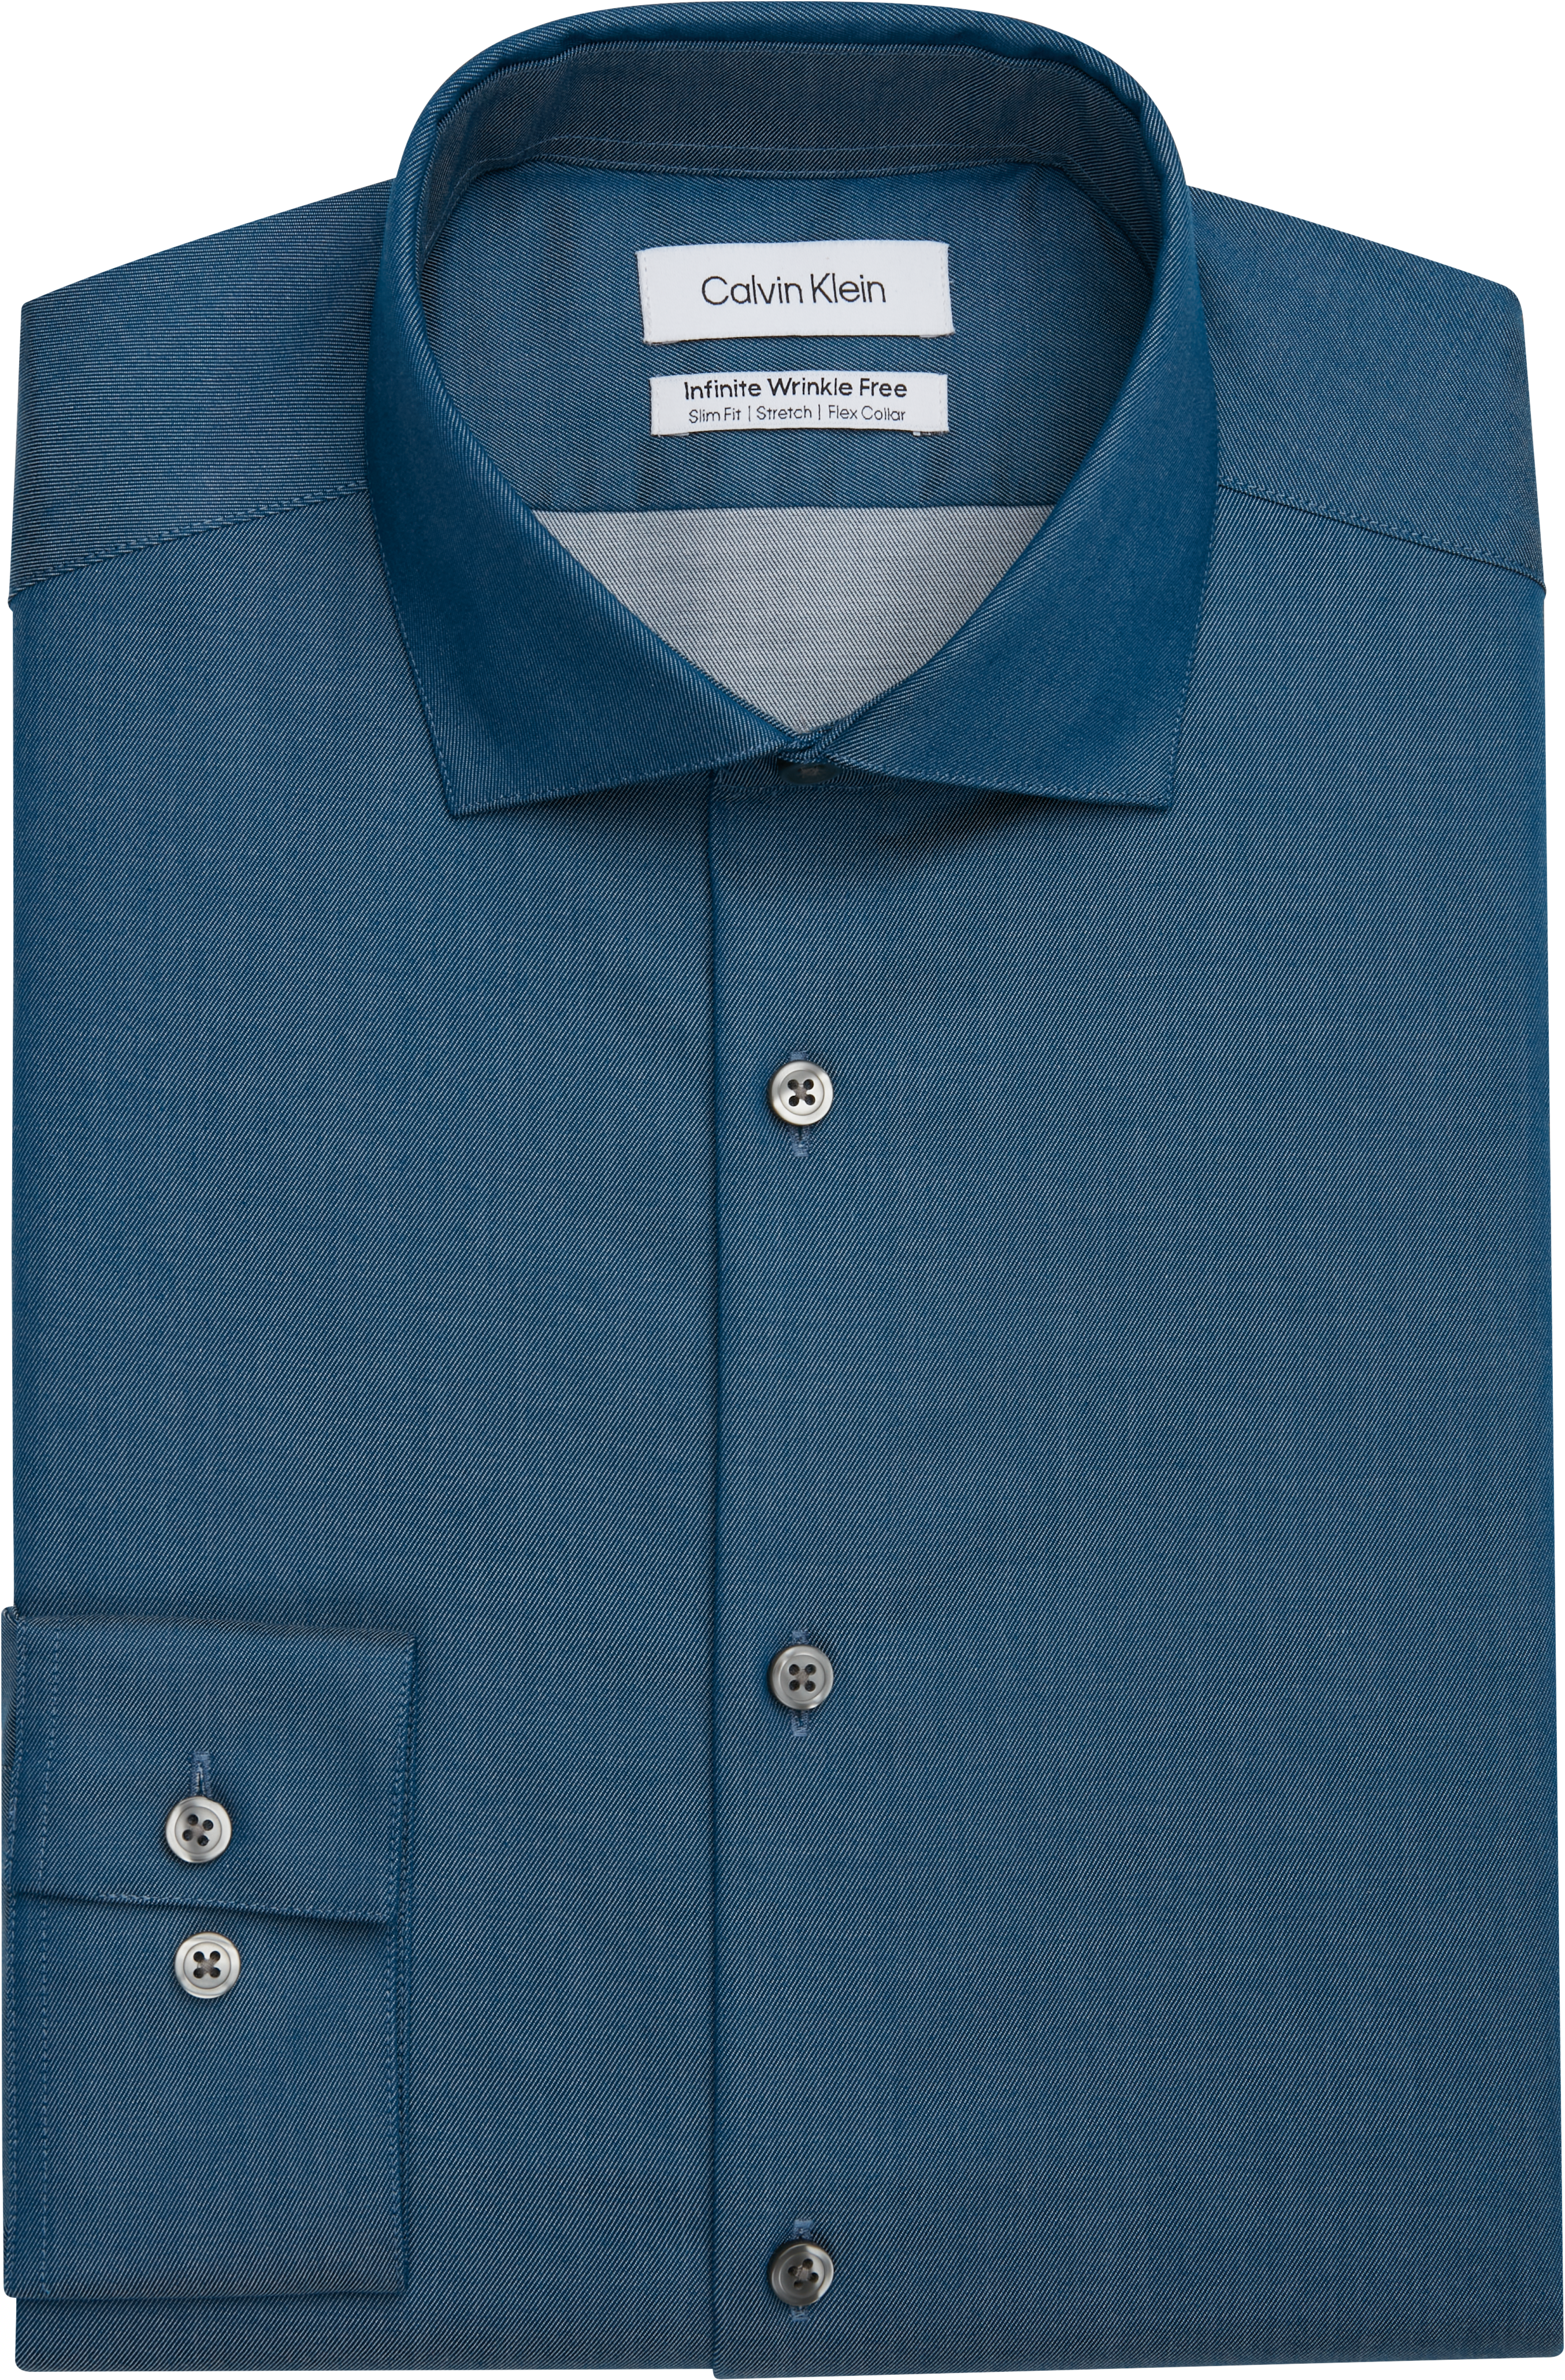 Calvin Klein Infinite Slim Fit Spread Collar Dress Shirt, Blue - Men's  Featured | Men's Wearhouse